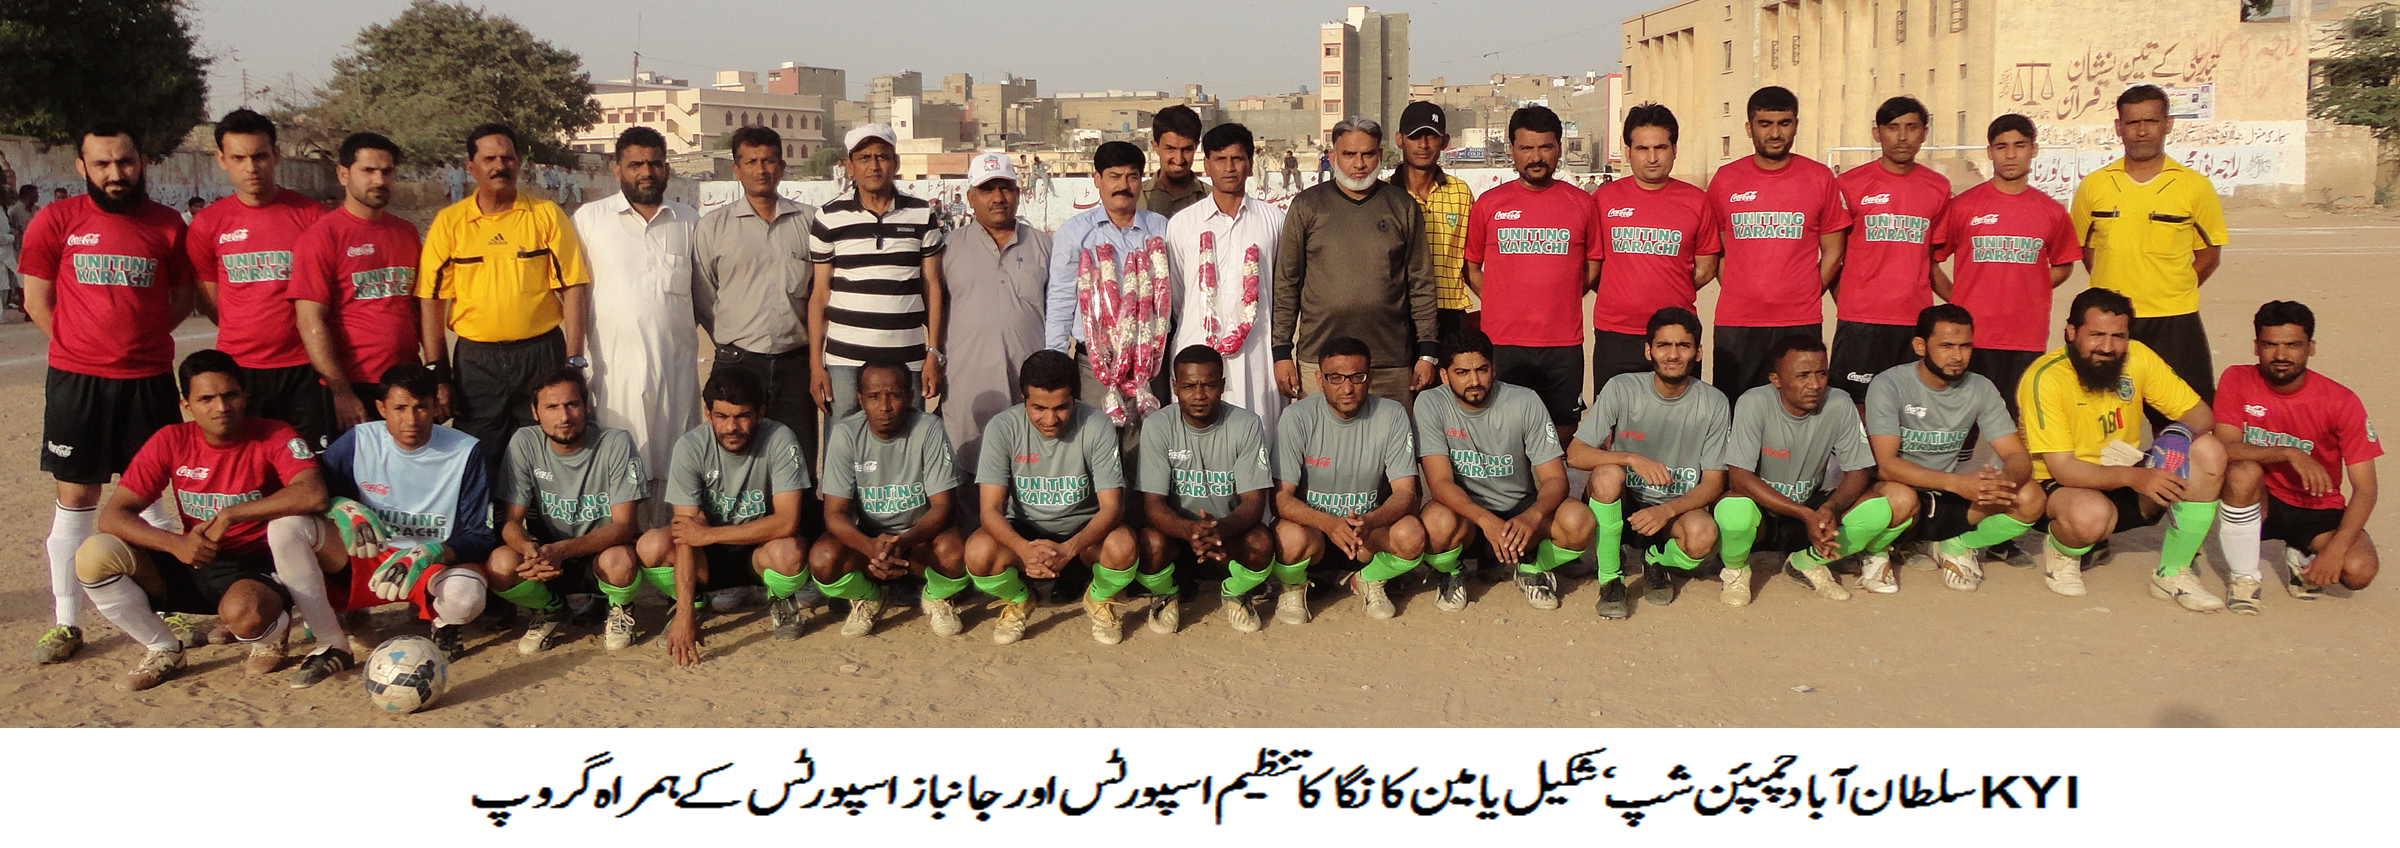 Coca-Cola Sultanabad Championship: Tanzeen Sports Gizri and Society Brothers grab wins